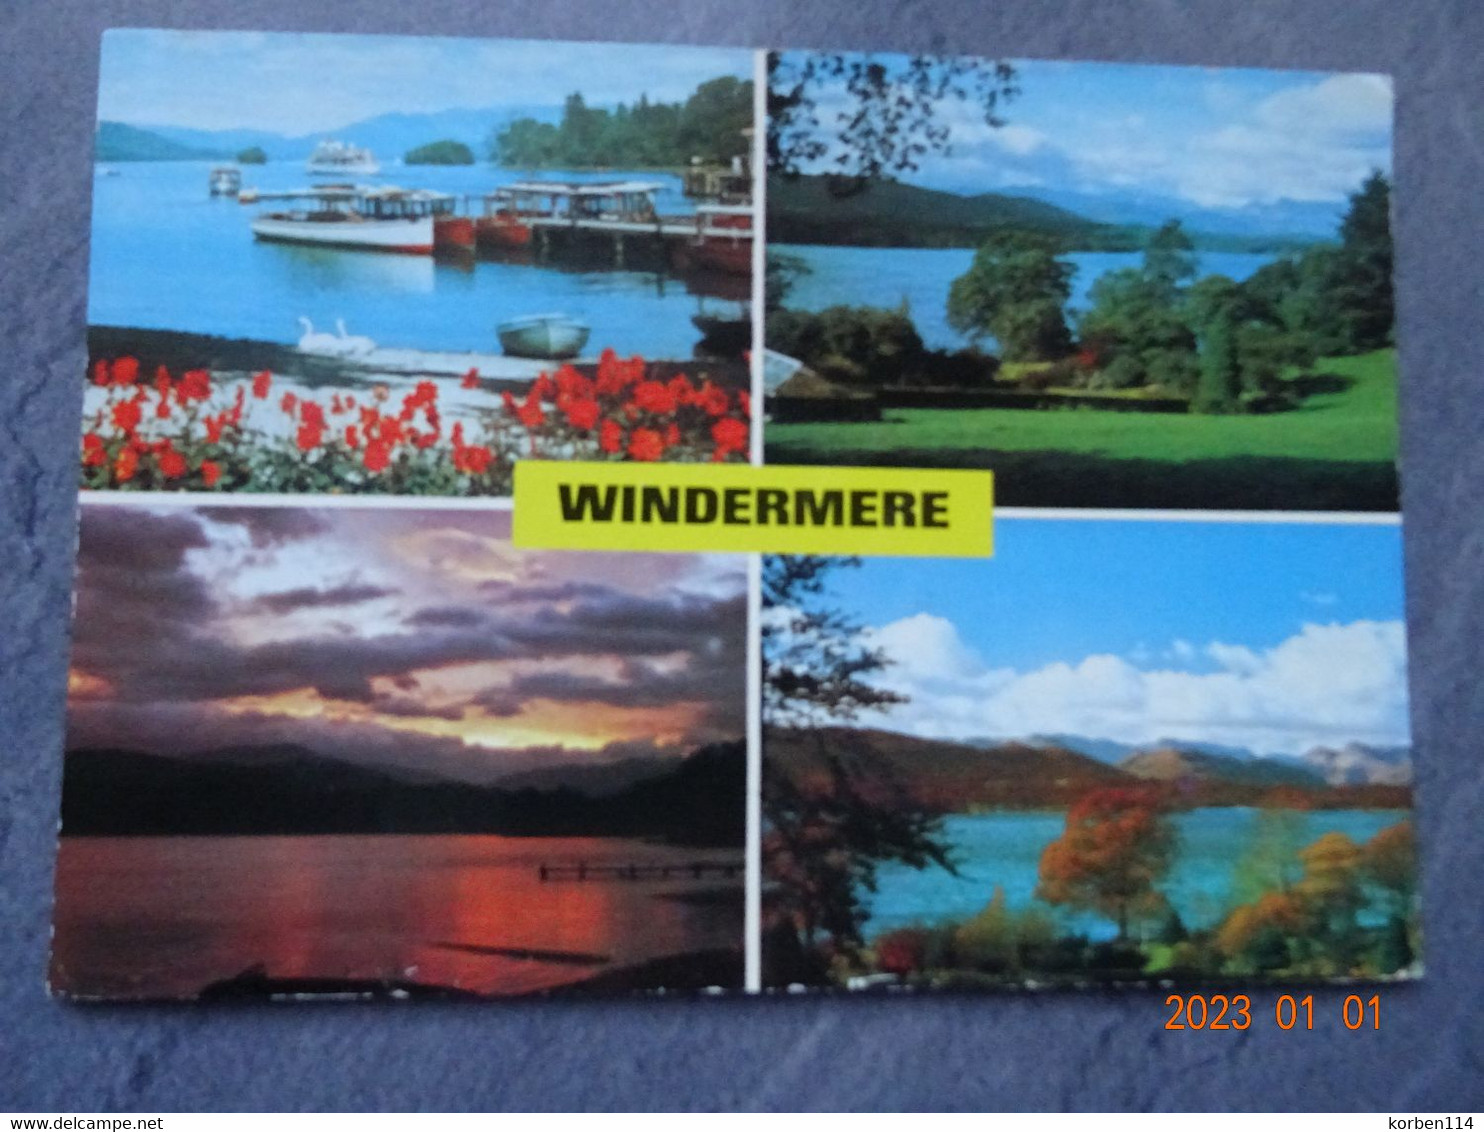 WINDERMERE - Windermere